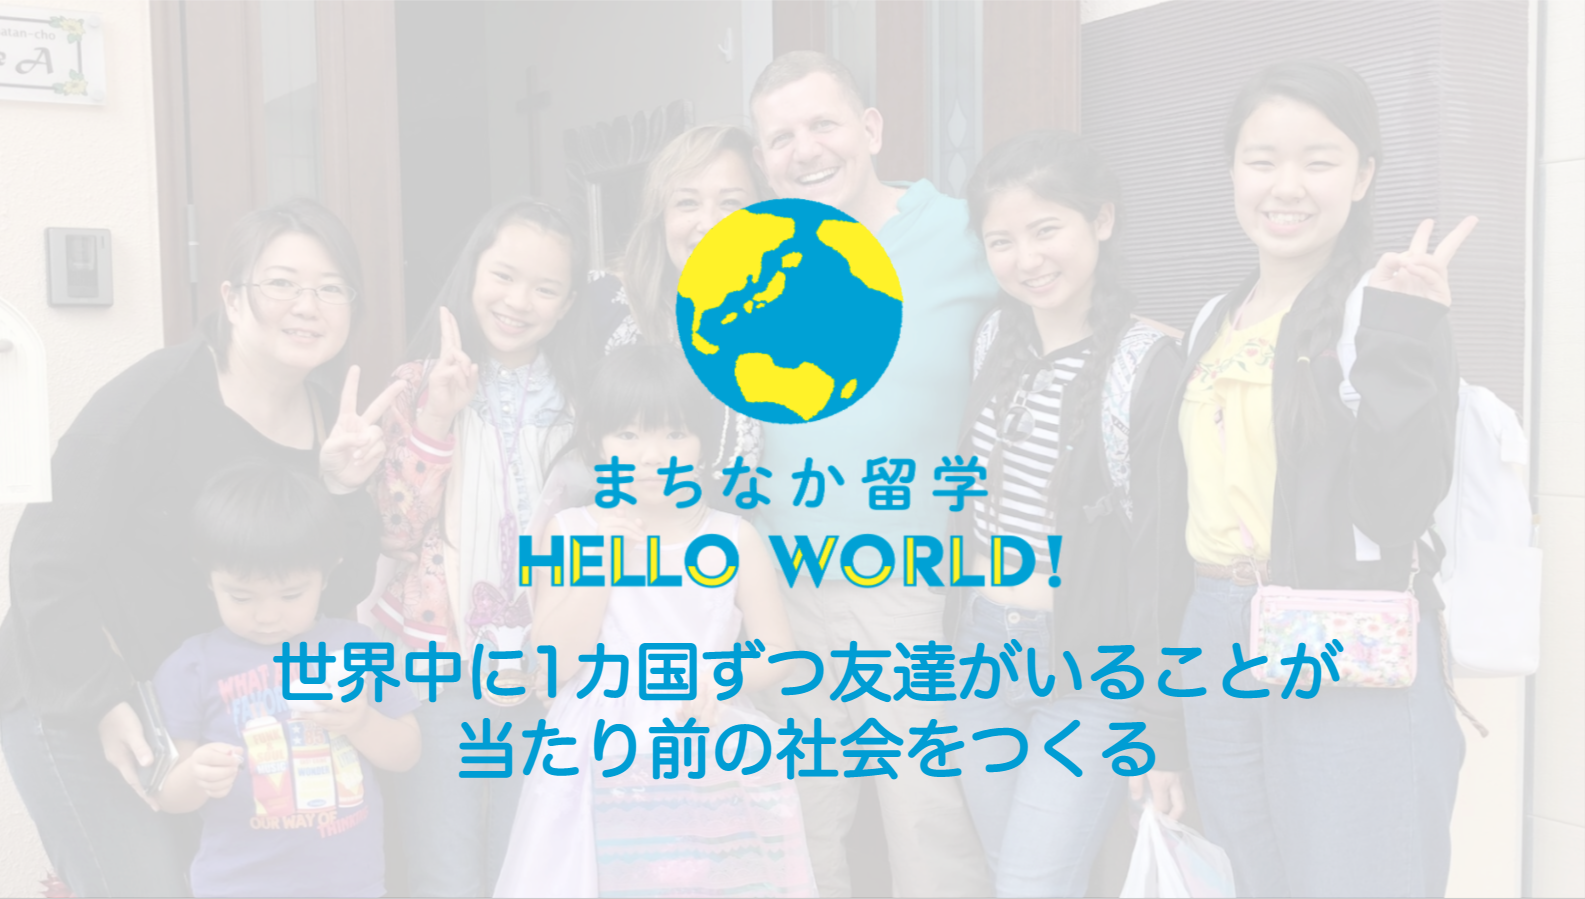 >HelloWorld株式会社